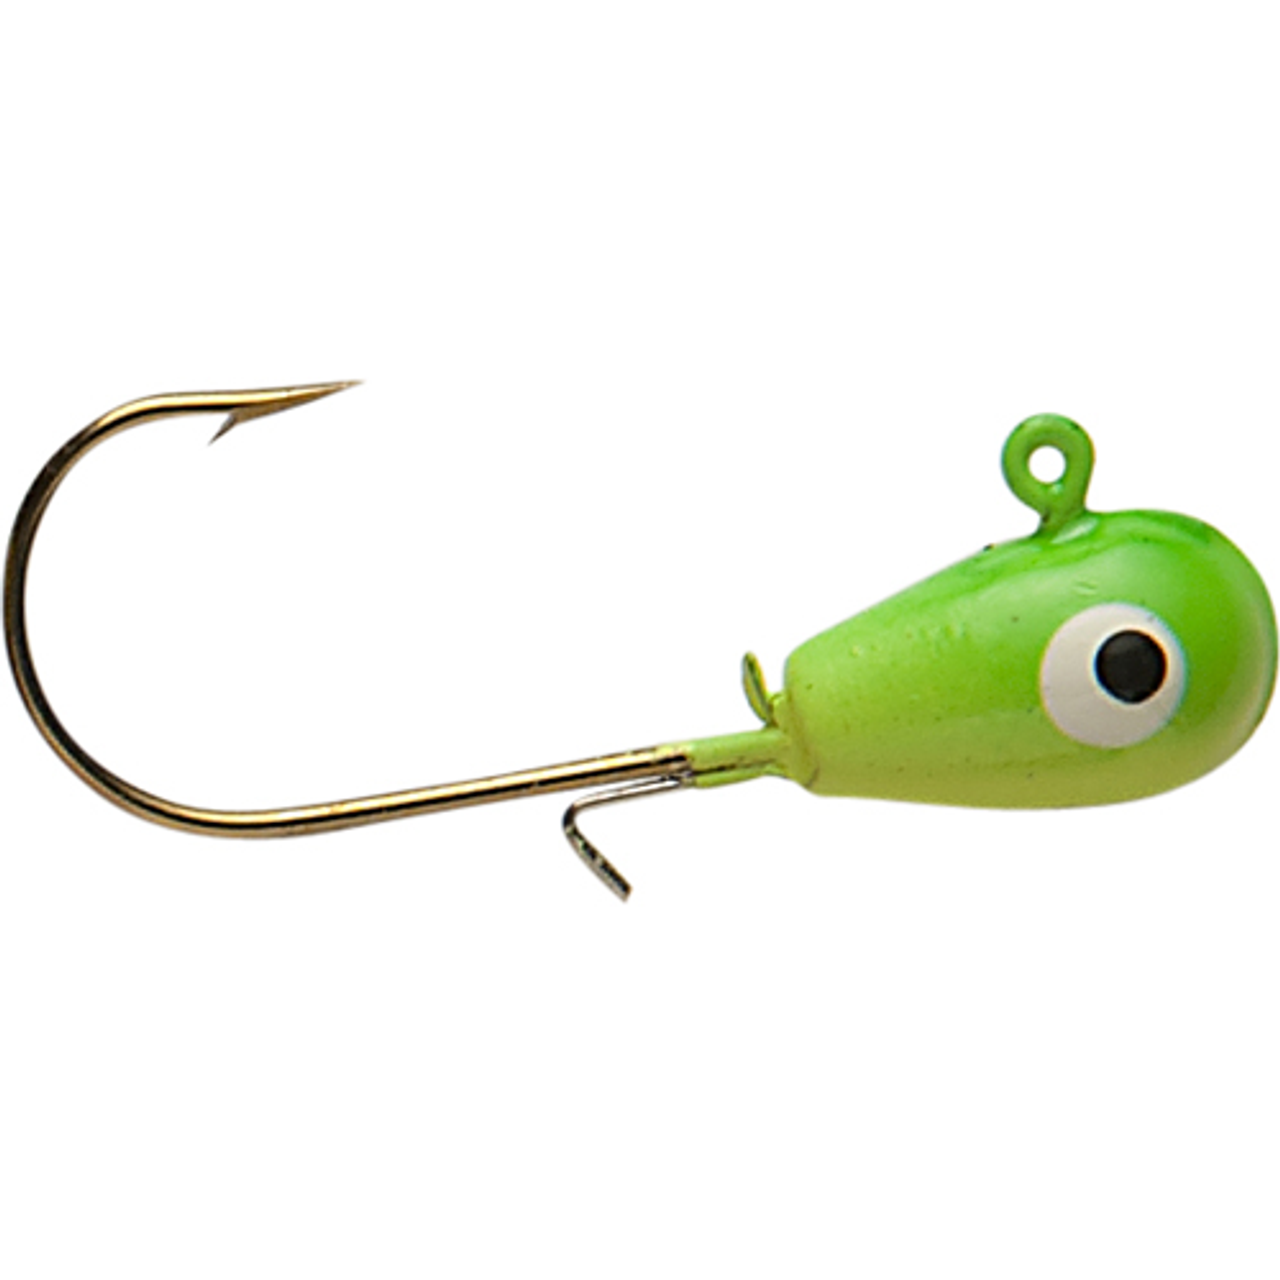 Stinger Hook - Precision Fishing